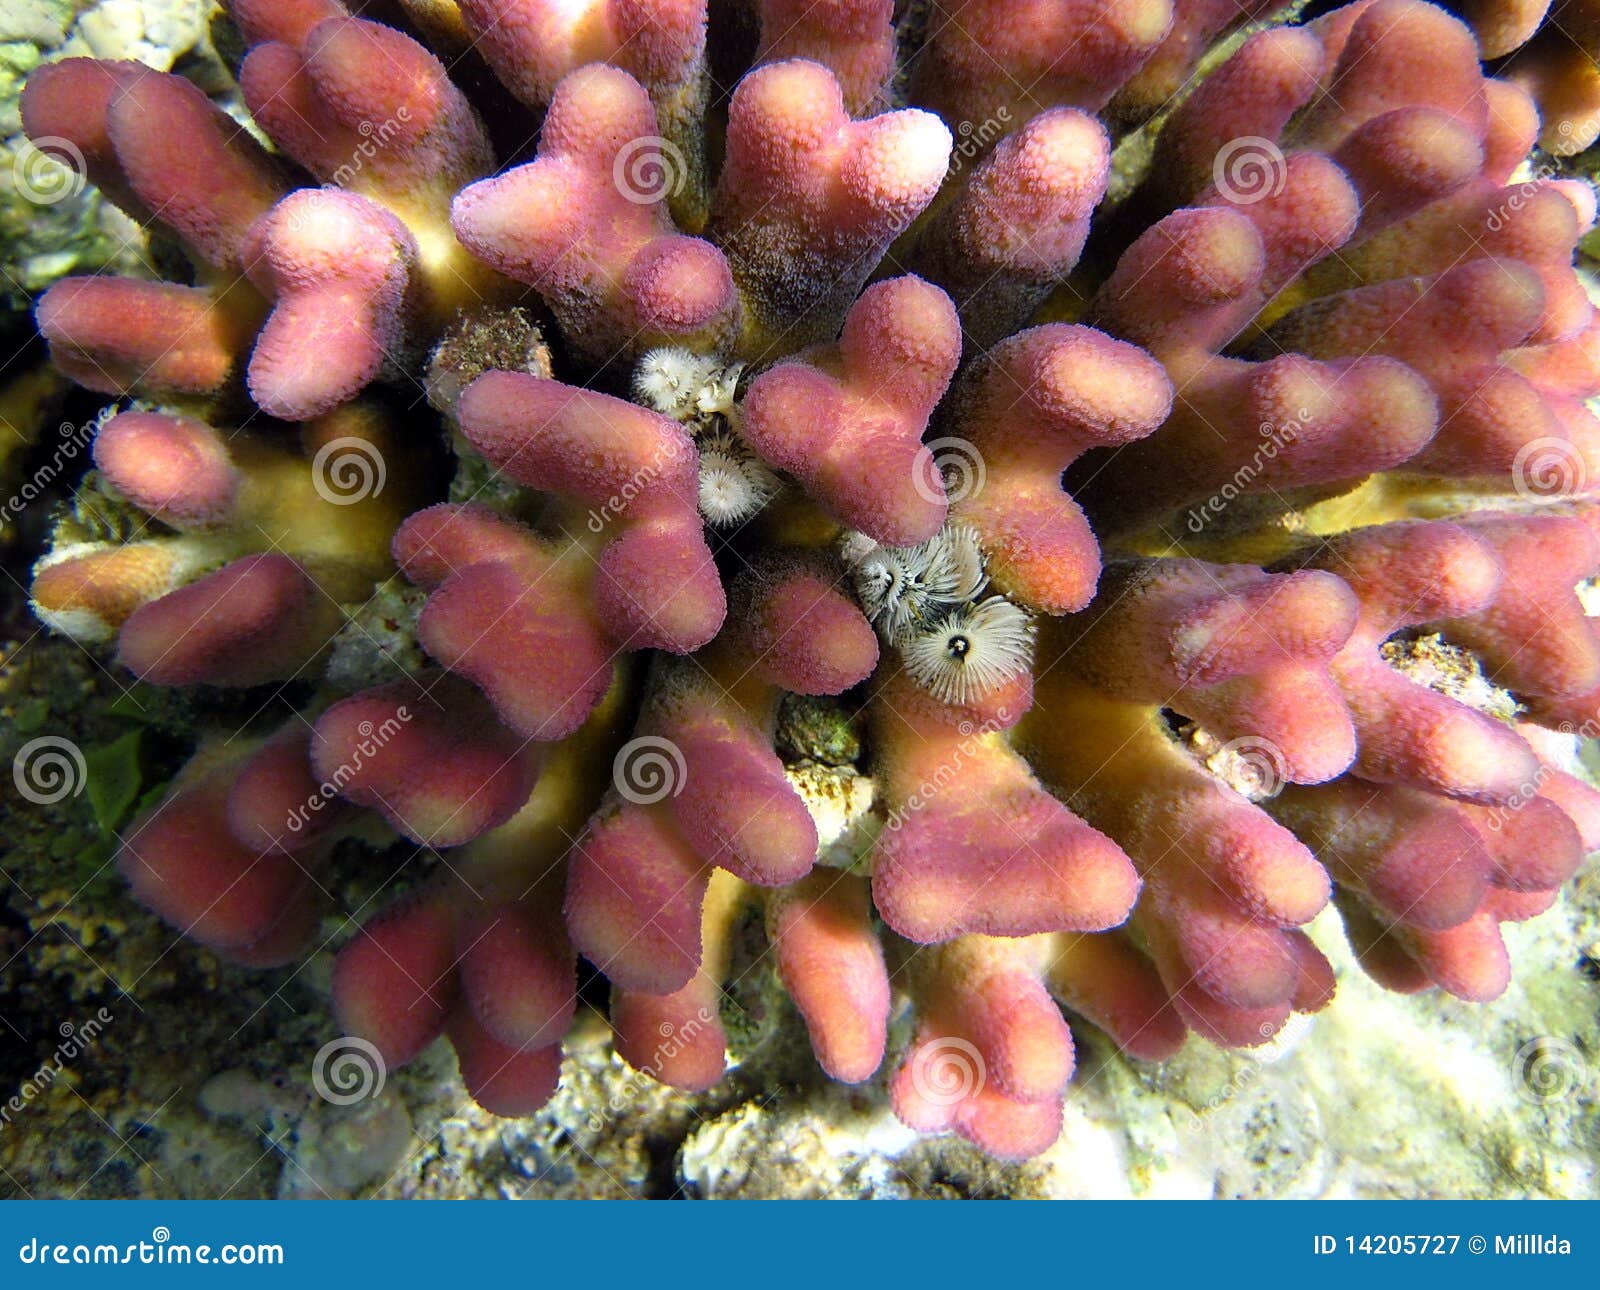 Pink coral reef stock image. Image of diving, macro, nature - 14205727